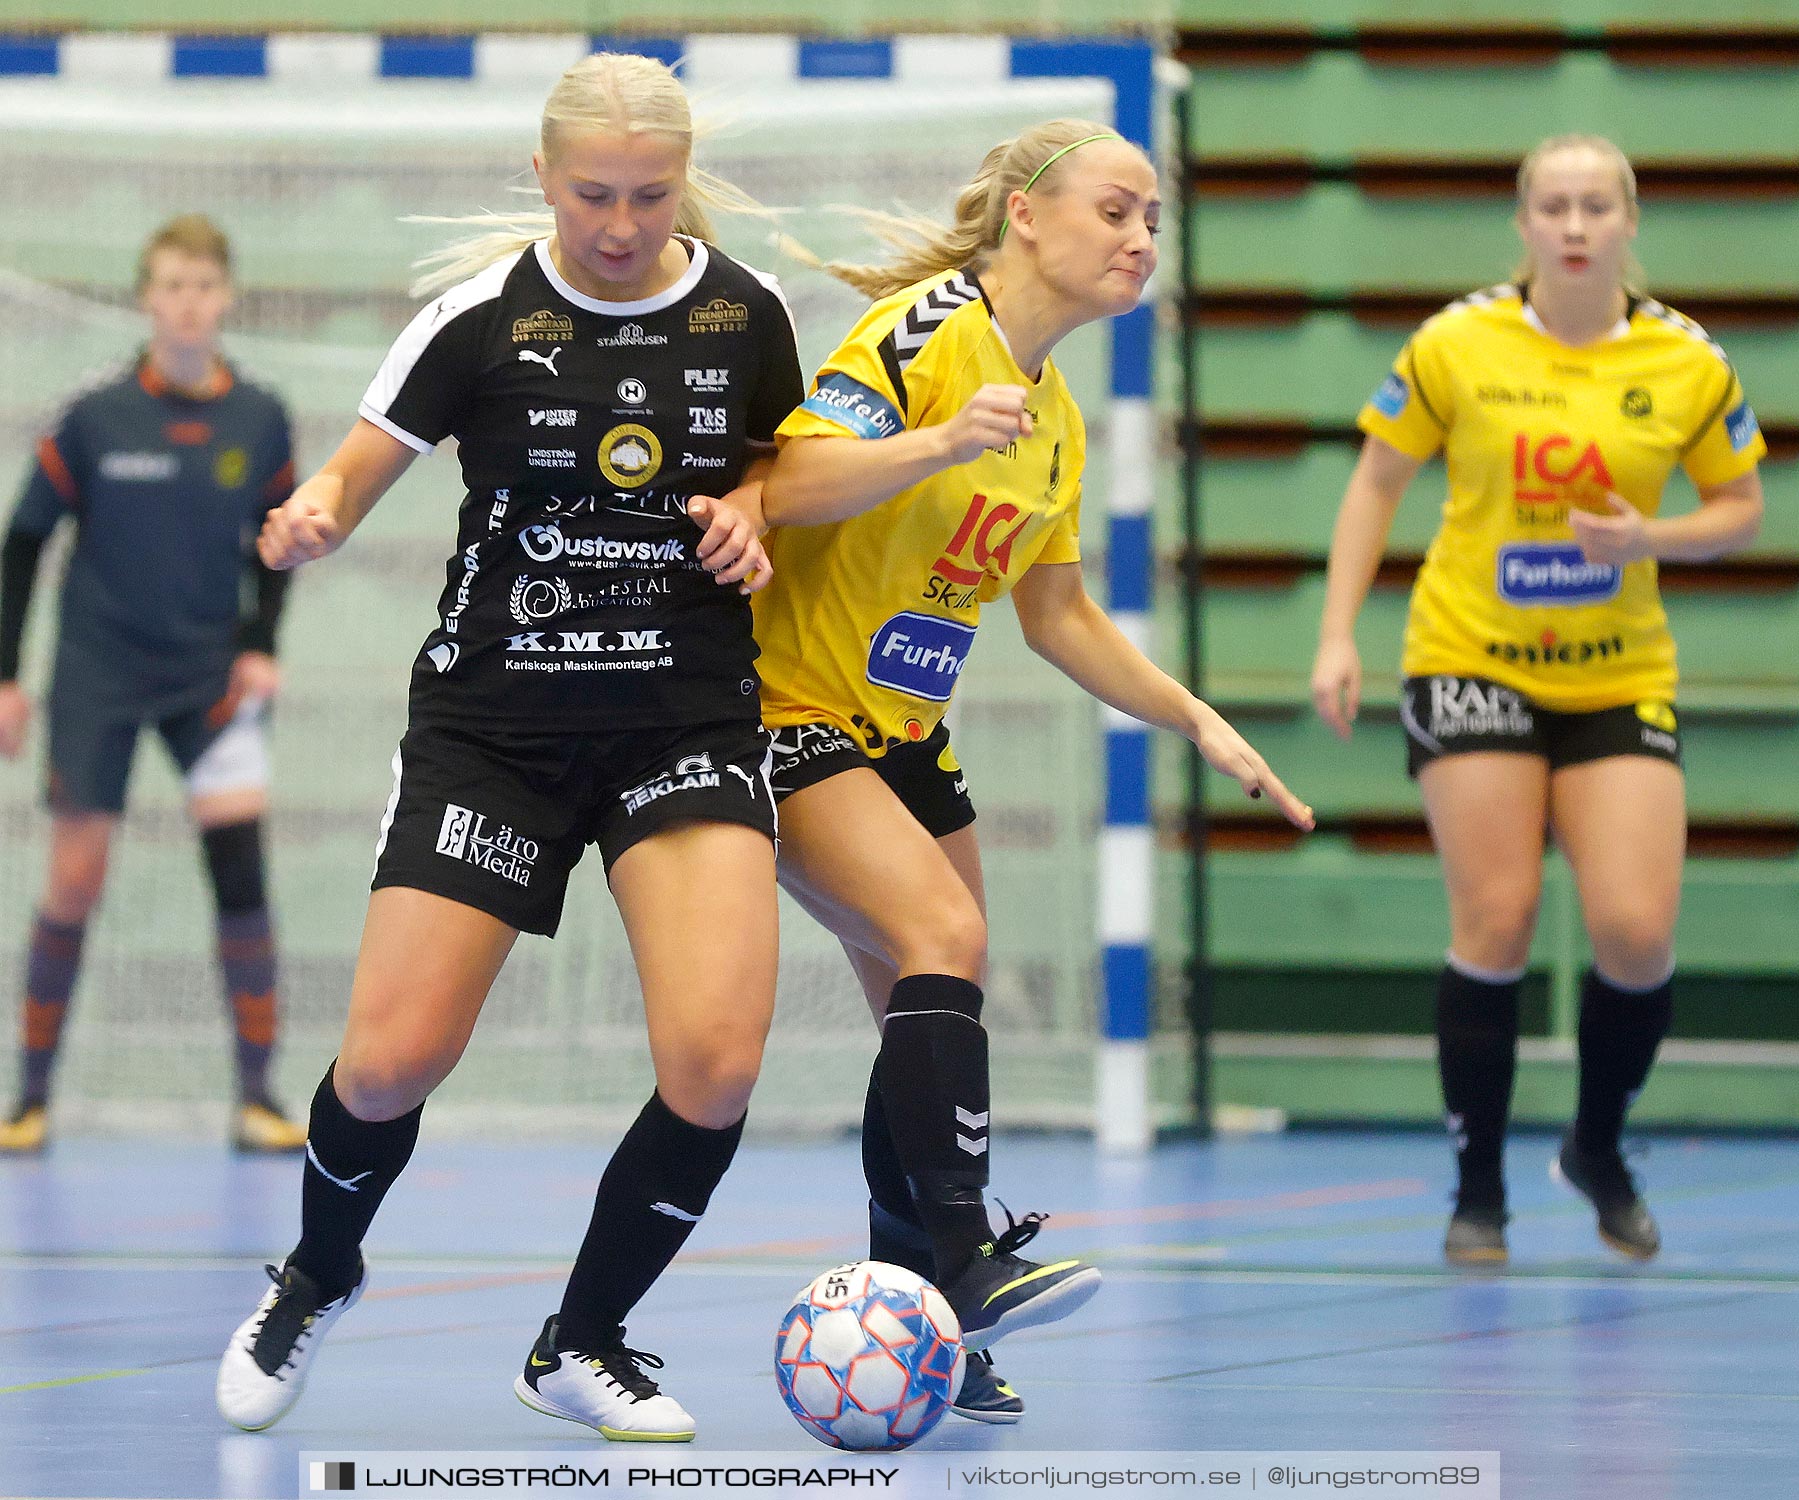 Skövde Futsalcup 2021 Damer Örebro Futsal Club-Skultorps IF 2,dam,Arena Skövde,Skövde,Sverige,Futsal,,2021,270481